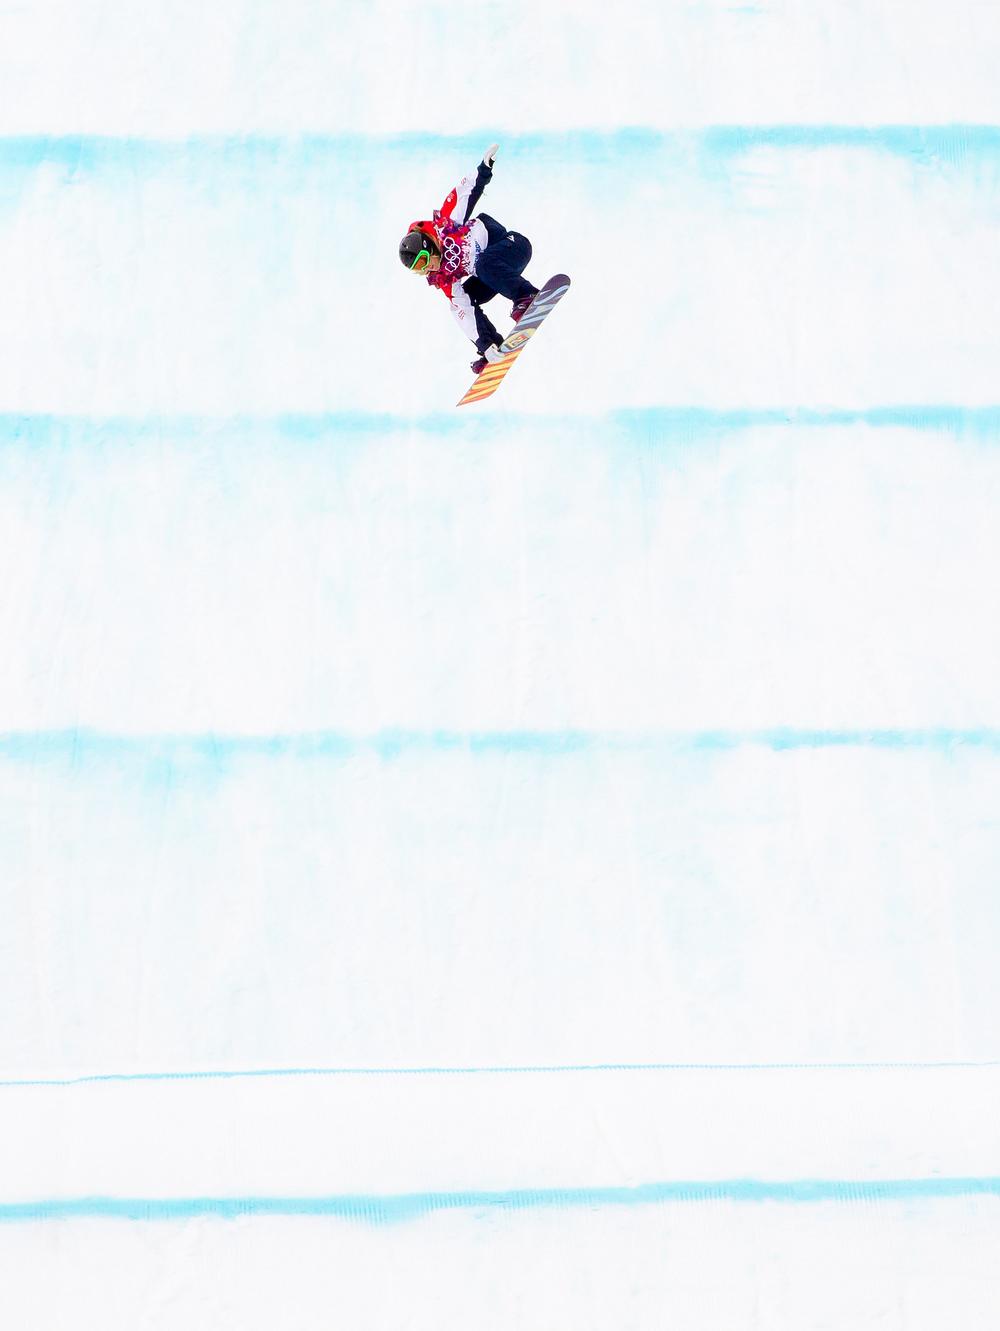 Jones’ run during the women’s snowboarding slopestyle final at the Sochi Games / PHOTO: M.Weyerhaeuser/jdpfreesport.com